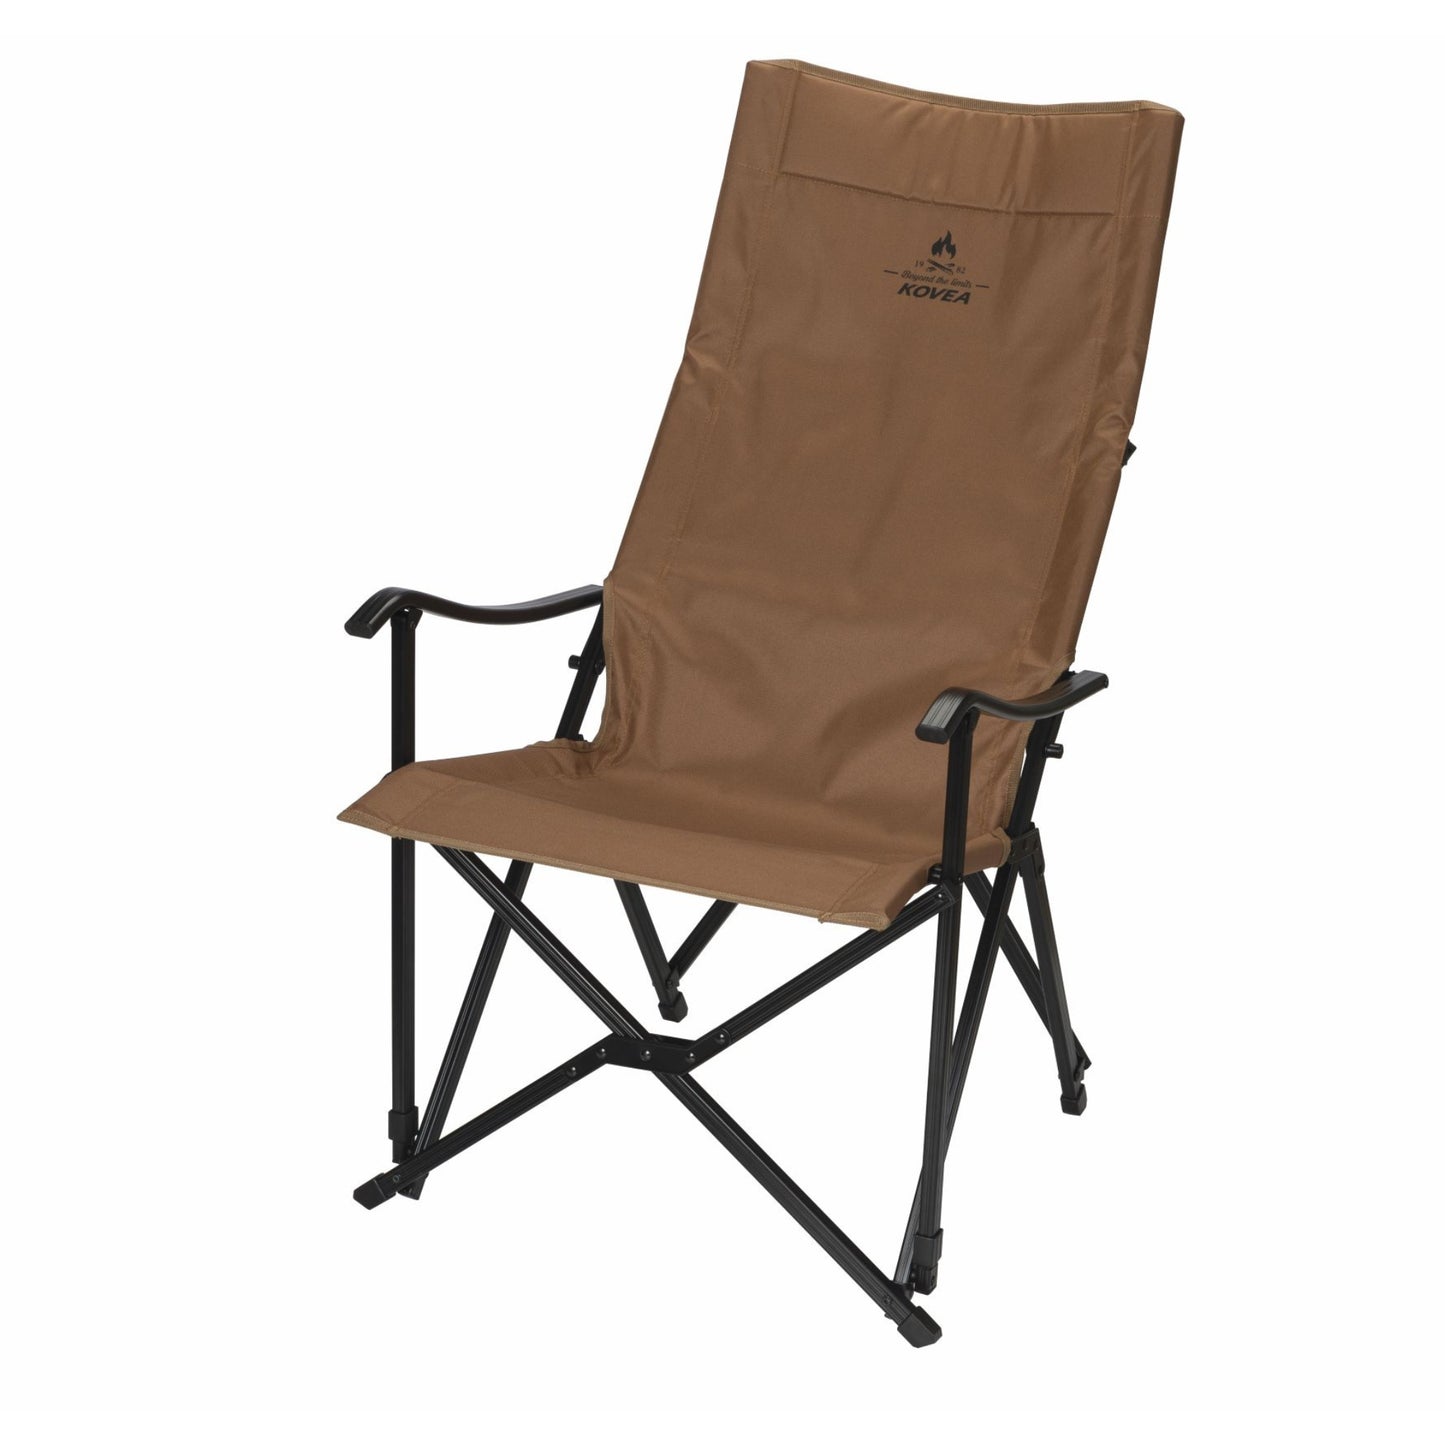 RELAX LONG CHAIR (GOLDEN BROWN) - Kovea Camping Chair